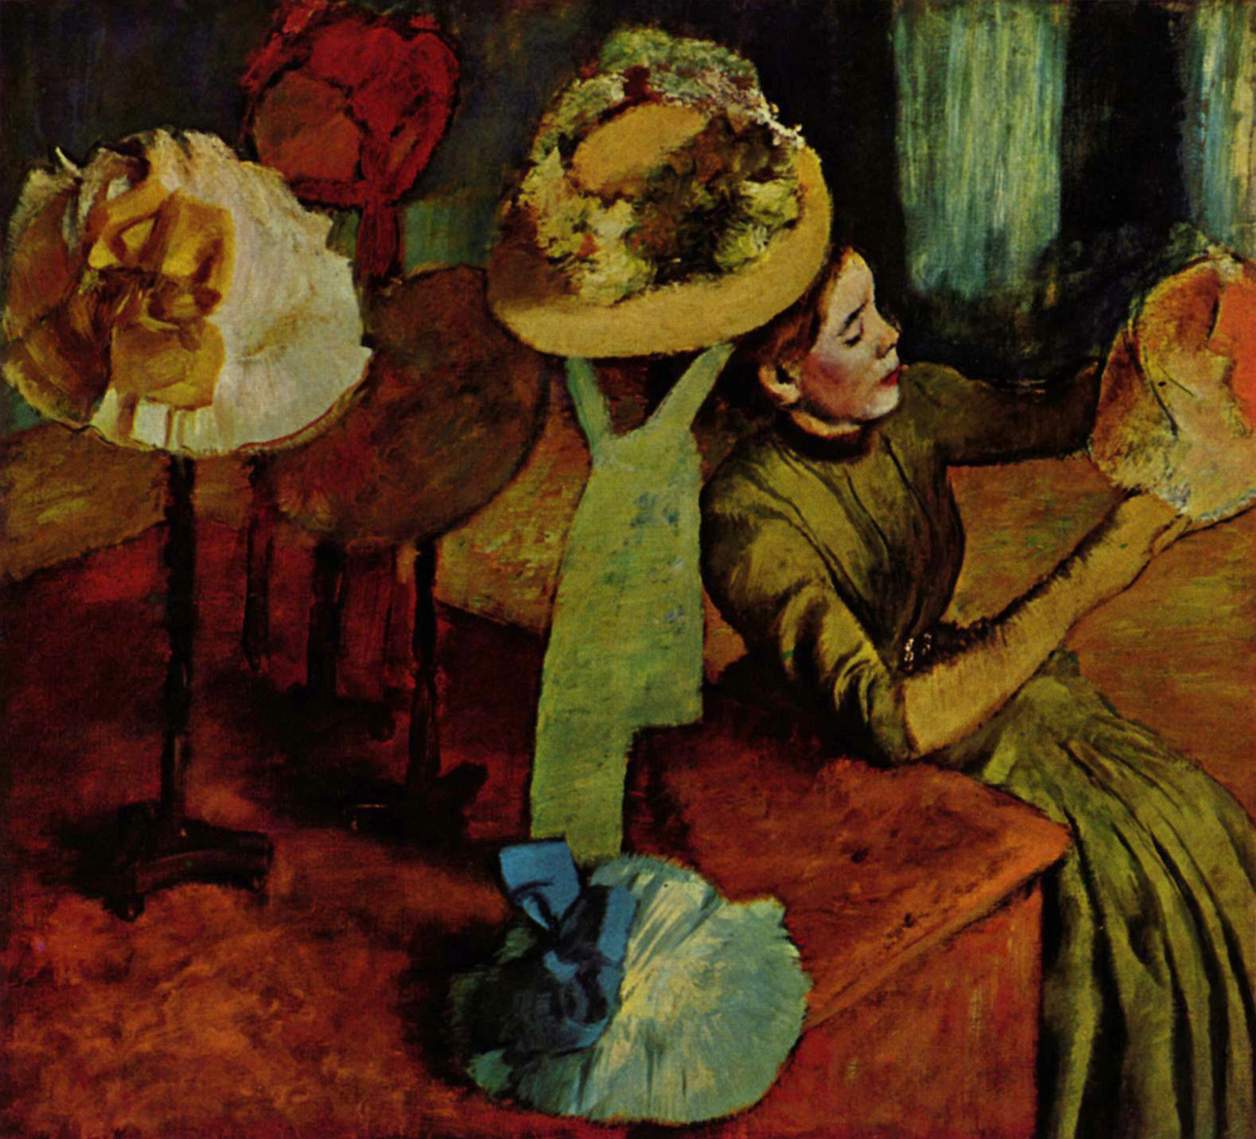 De Hoedenzaak by Edgar Degas - 1885 - 99 × 109 cm 